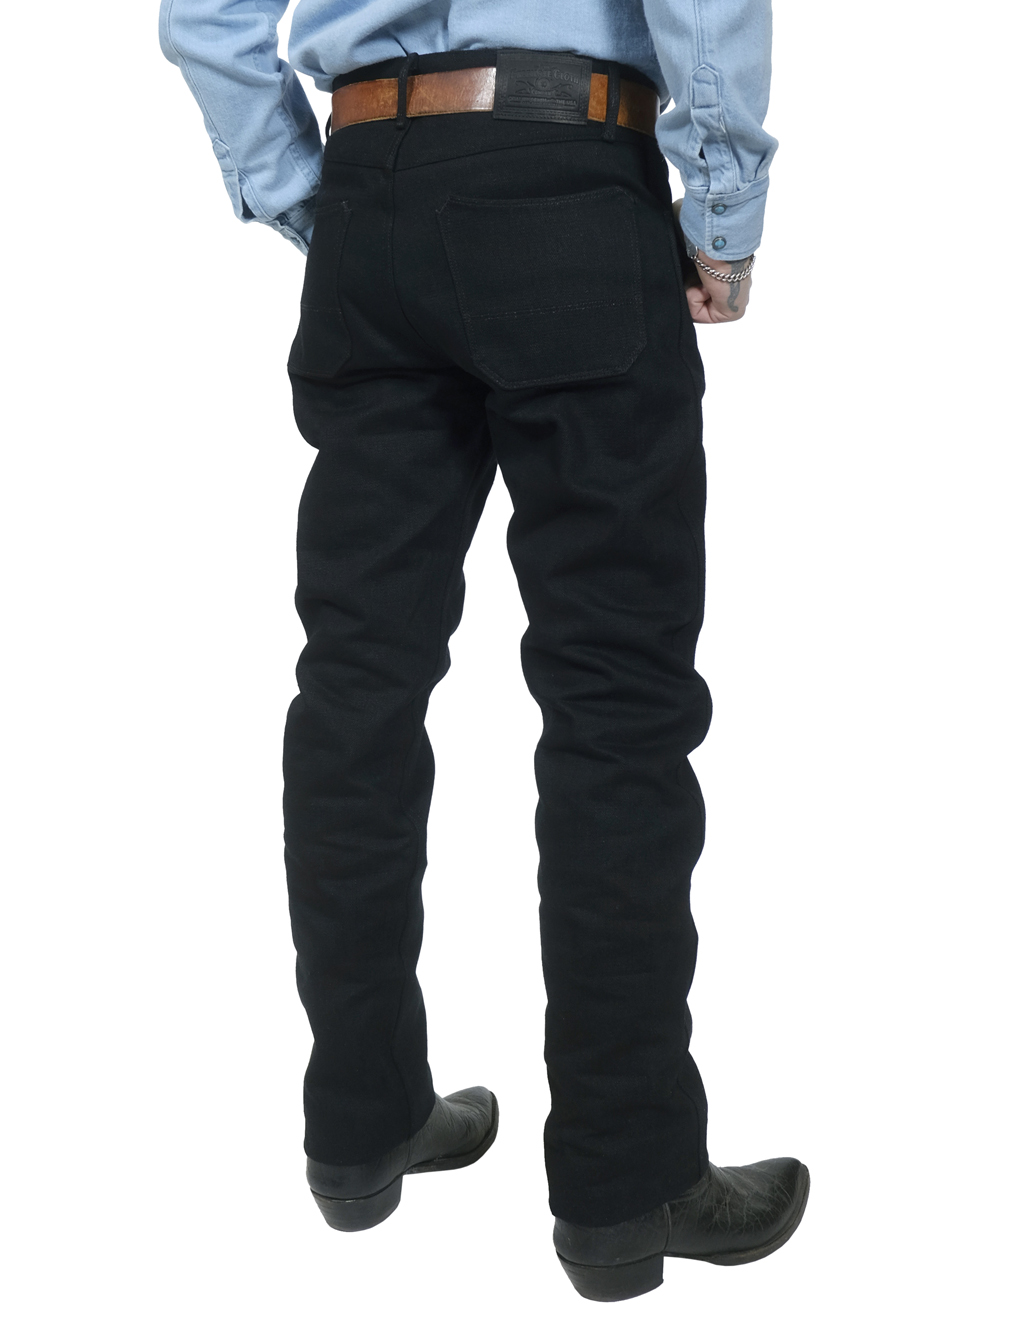 Freenote Cloth - Wilkes Western Raw Black Slub Denim Jeans - 17 oz